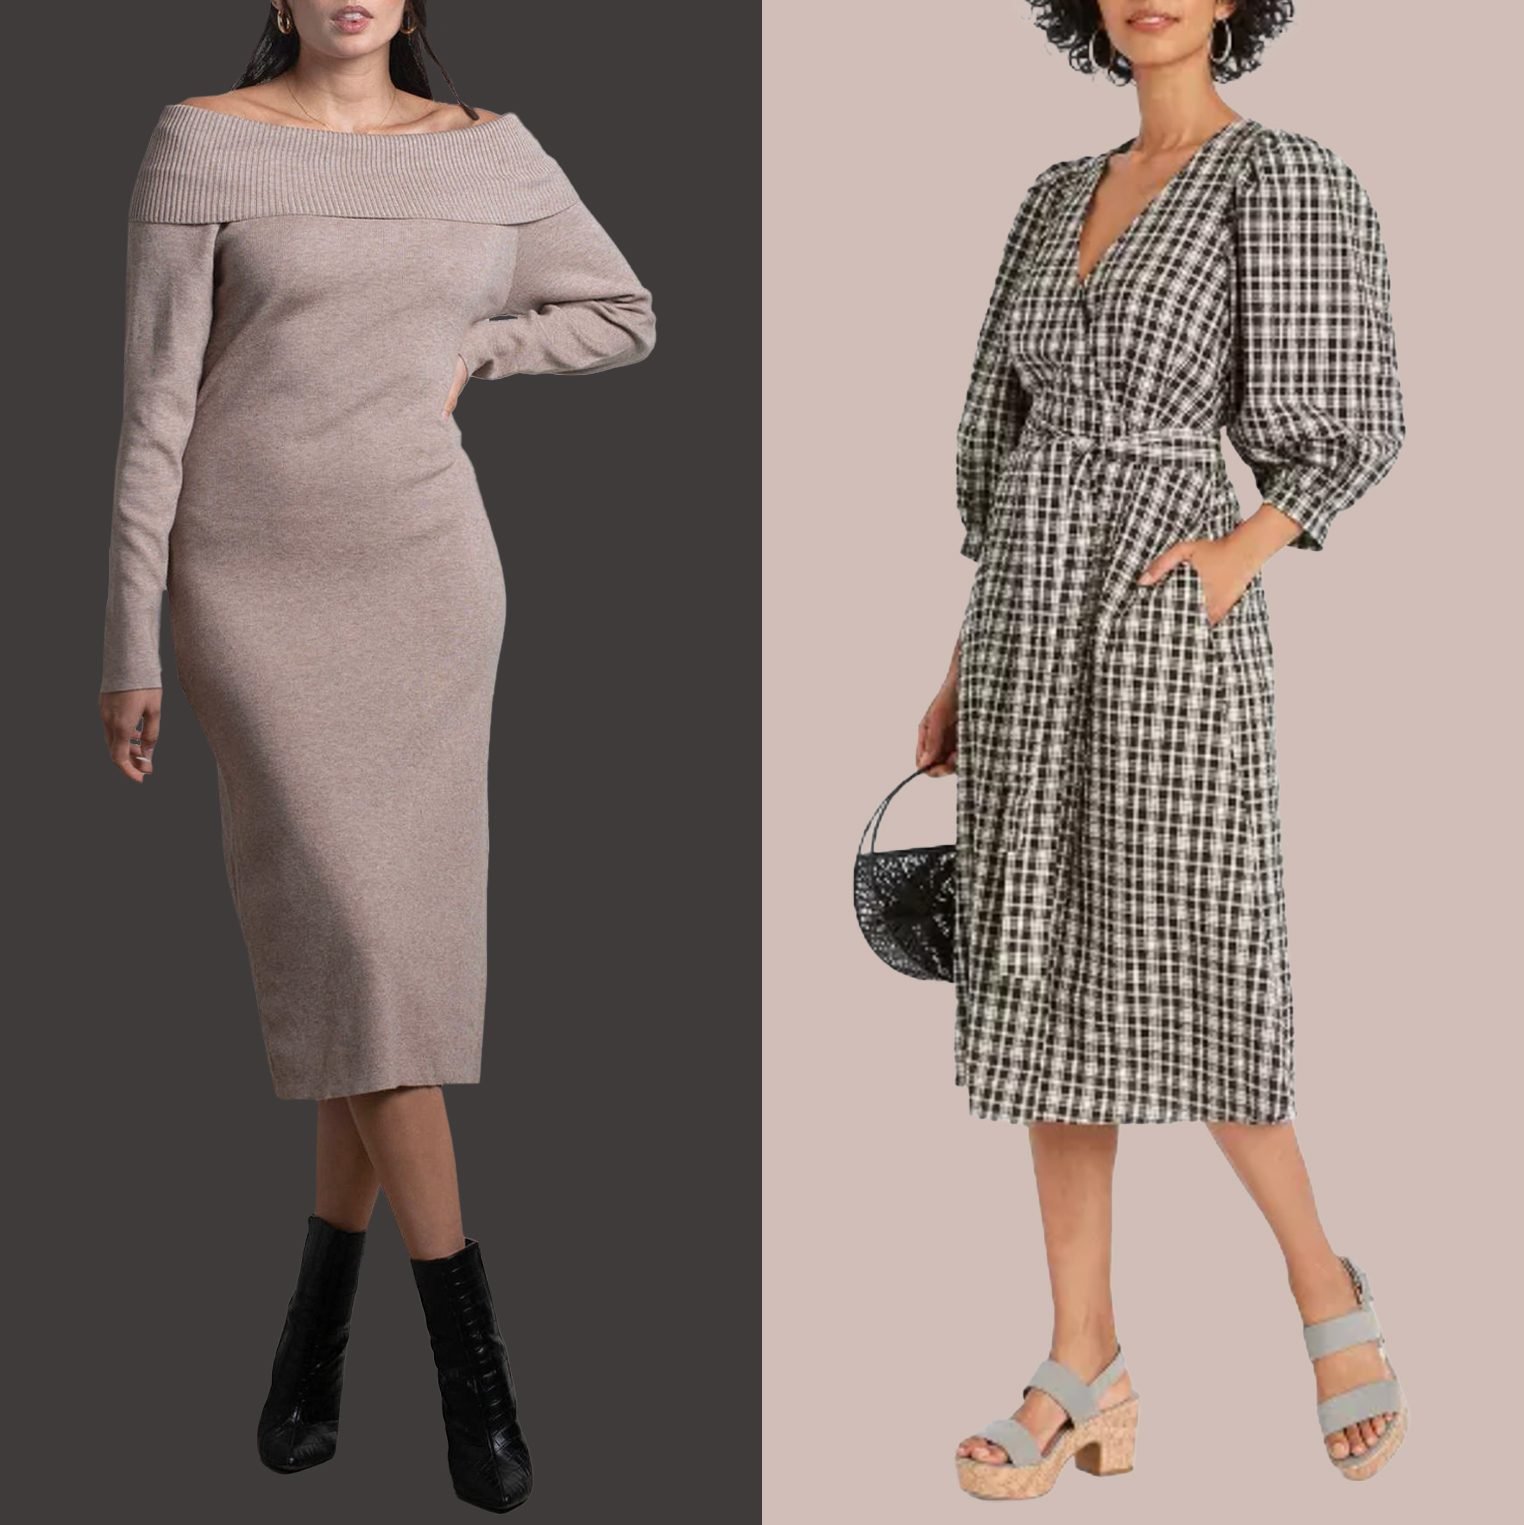 classic dresses collage